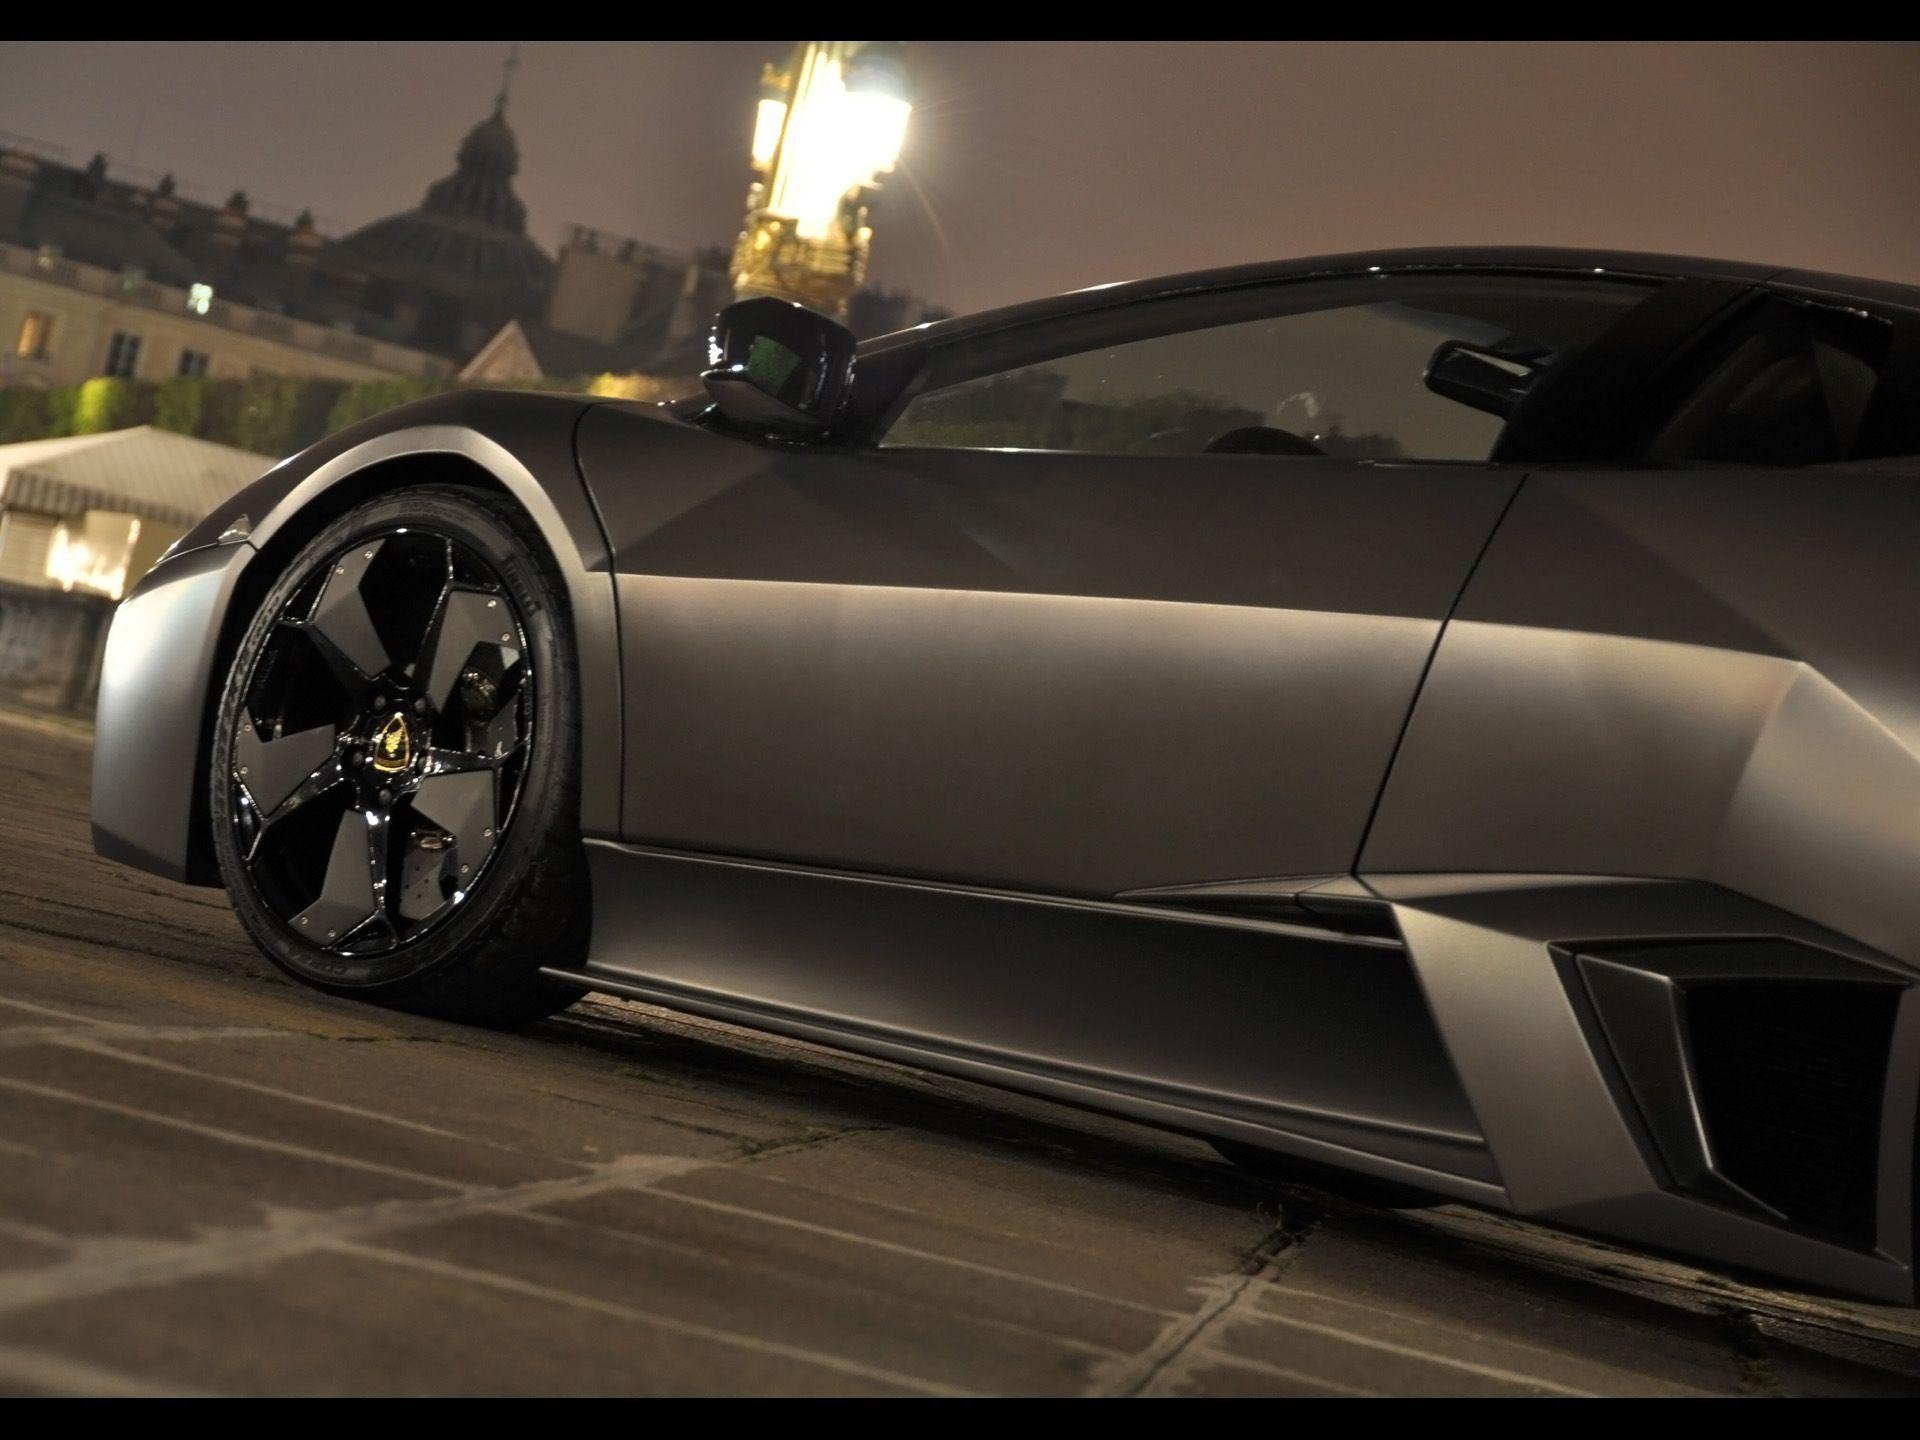 Sport Cars Lamborghini Reventon and Scared To Try Auto Repair? Use